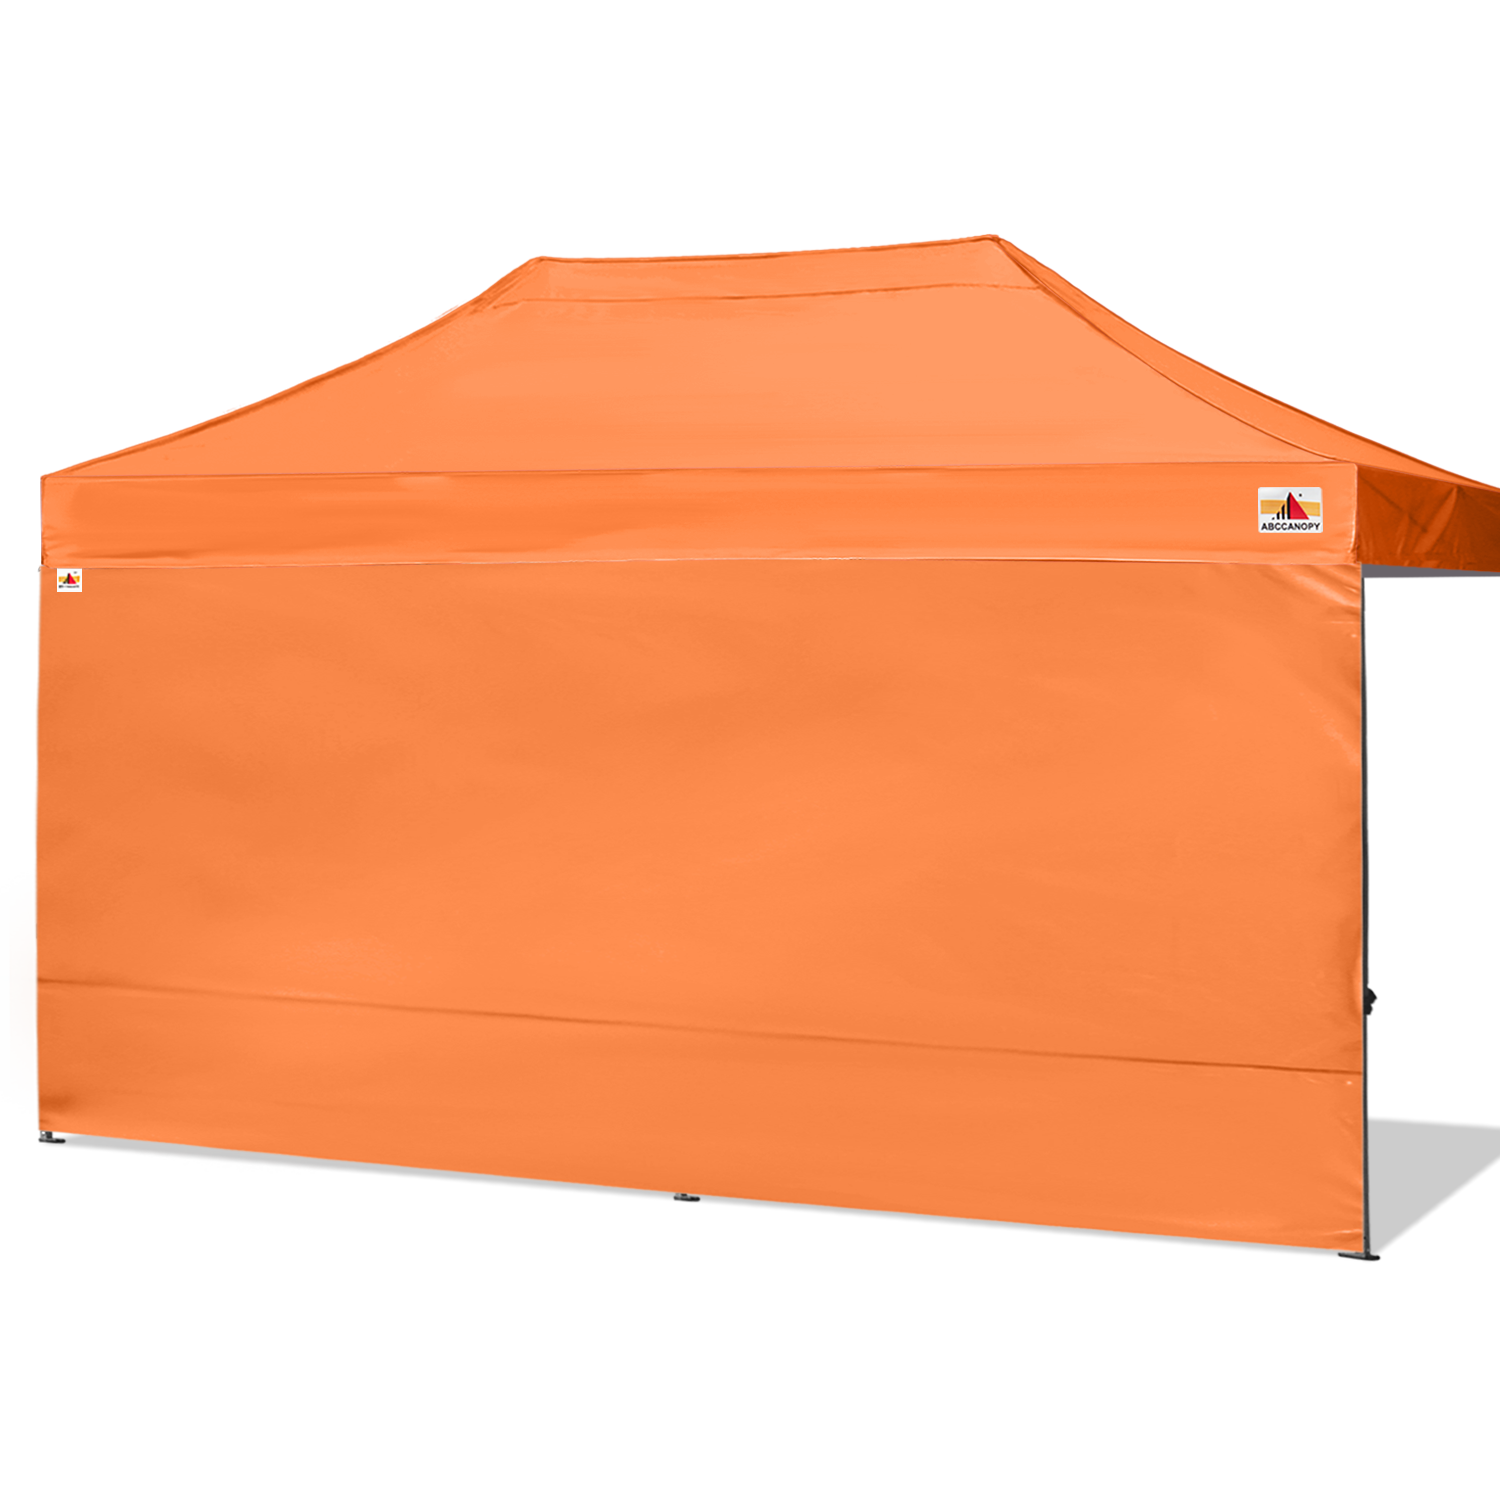 Horizontal Velcro Sidewall for 10x10/10x15/10x20 canopy (Overseas)